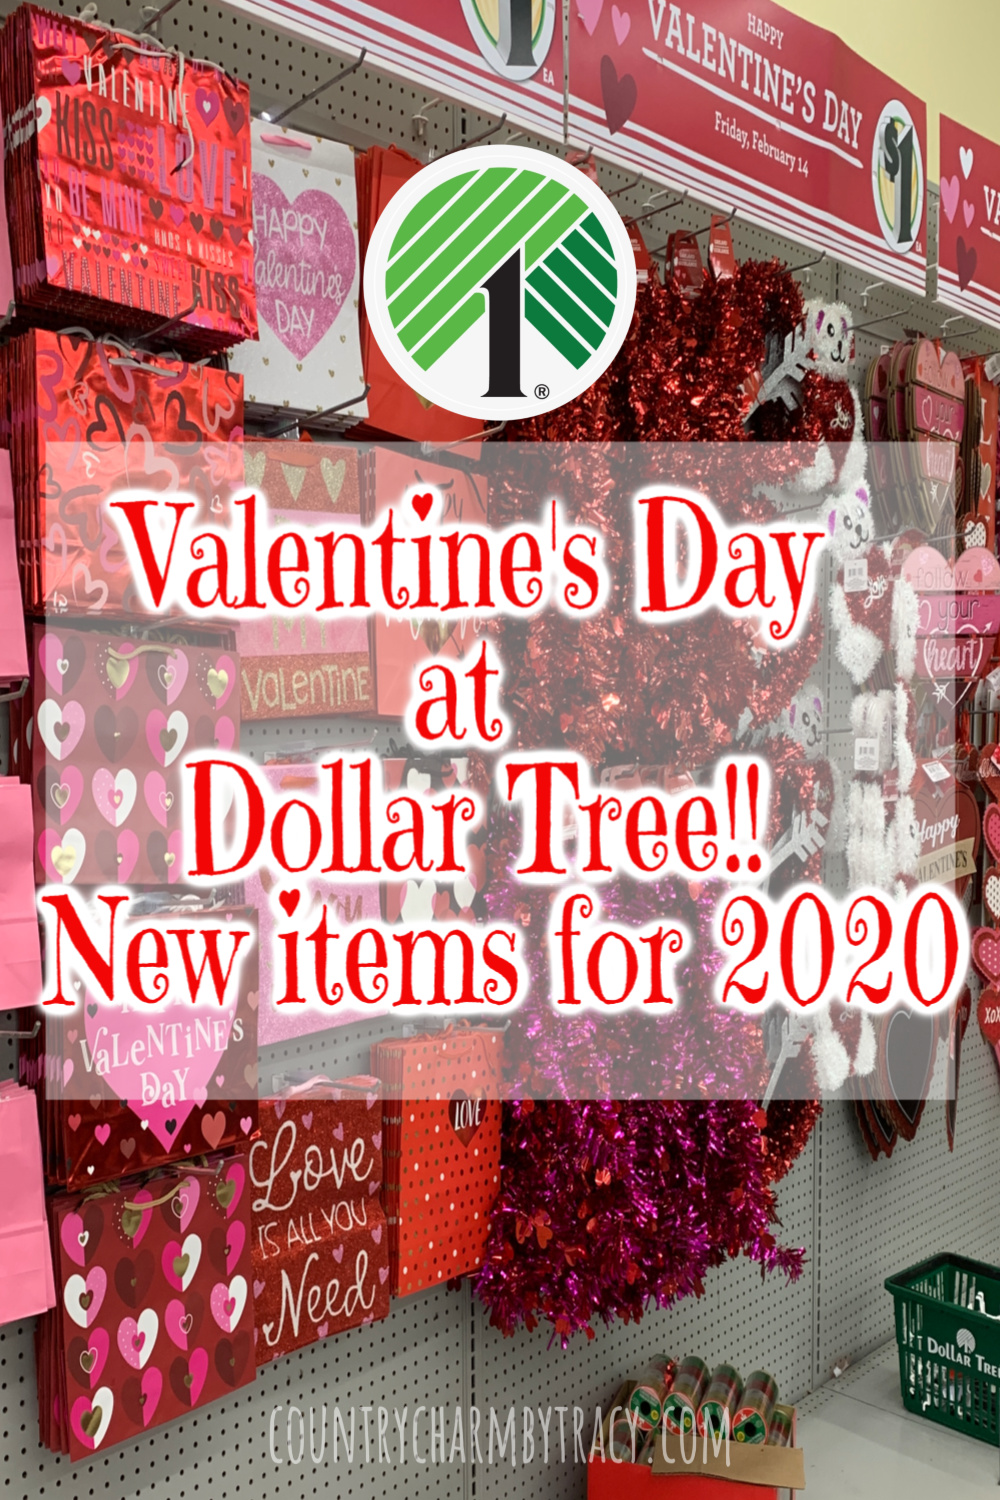 Simple EASY DIY Valentines Gift Ideas from Dollar Tree~Dollar Tree